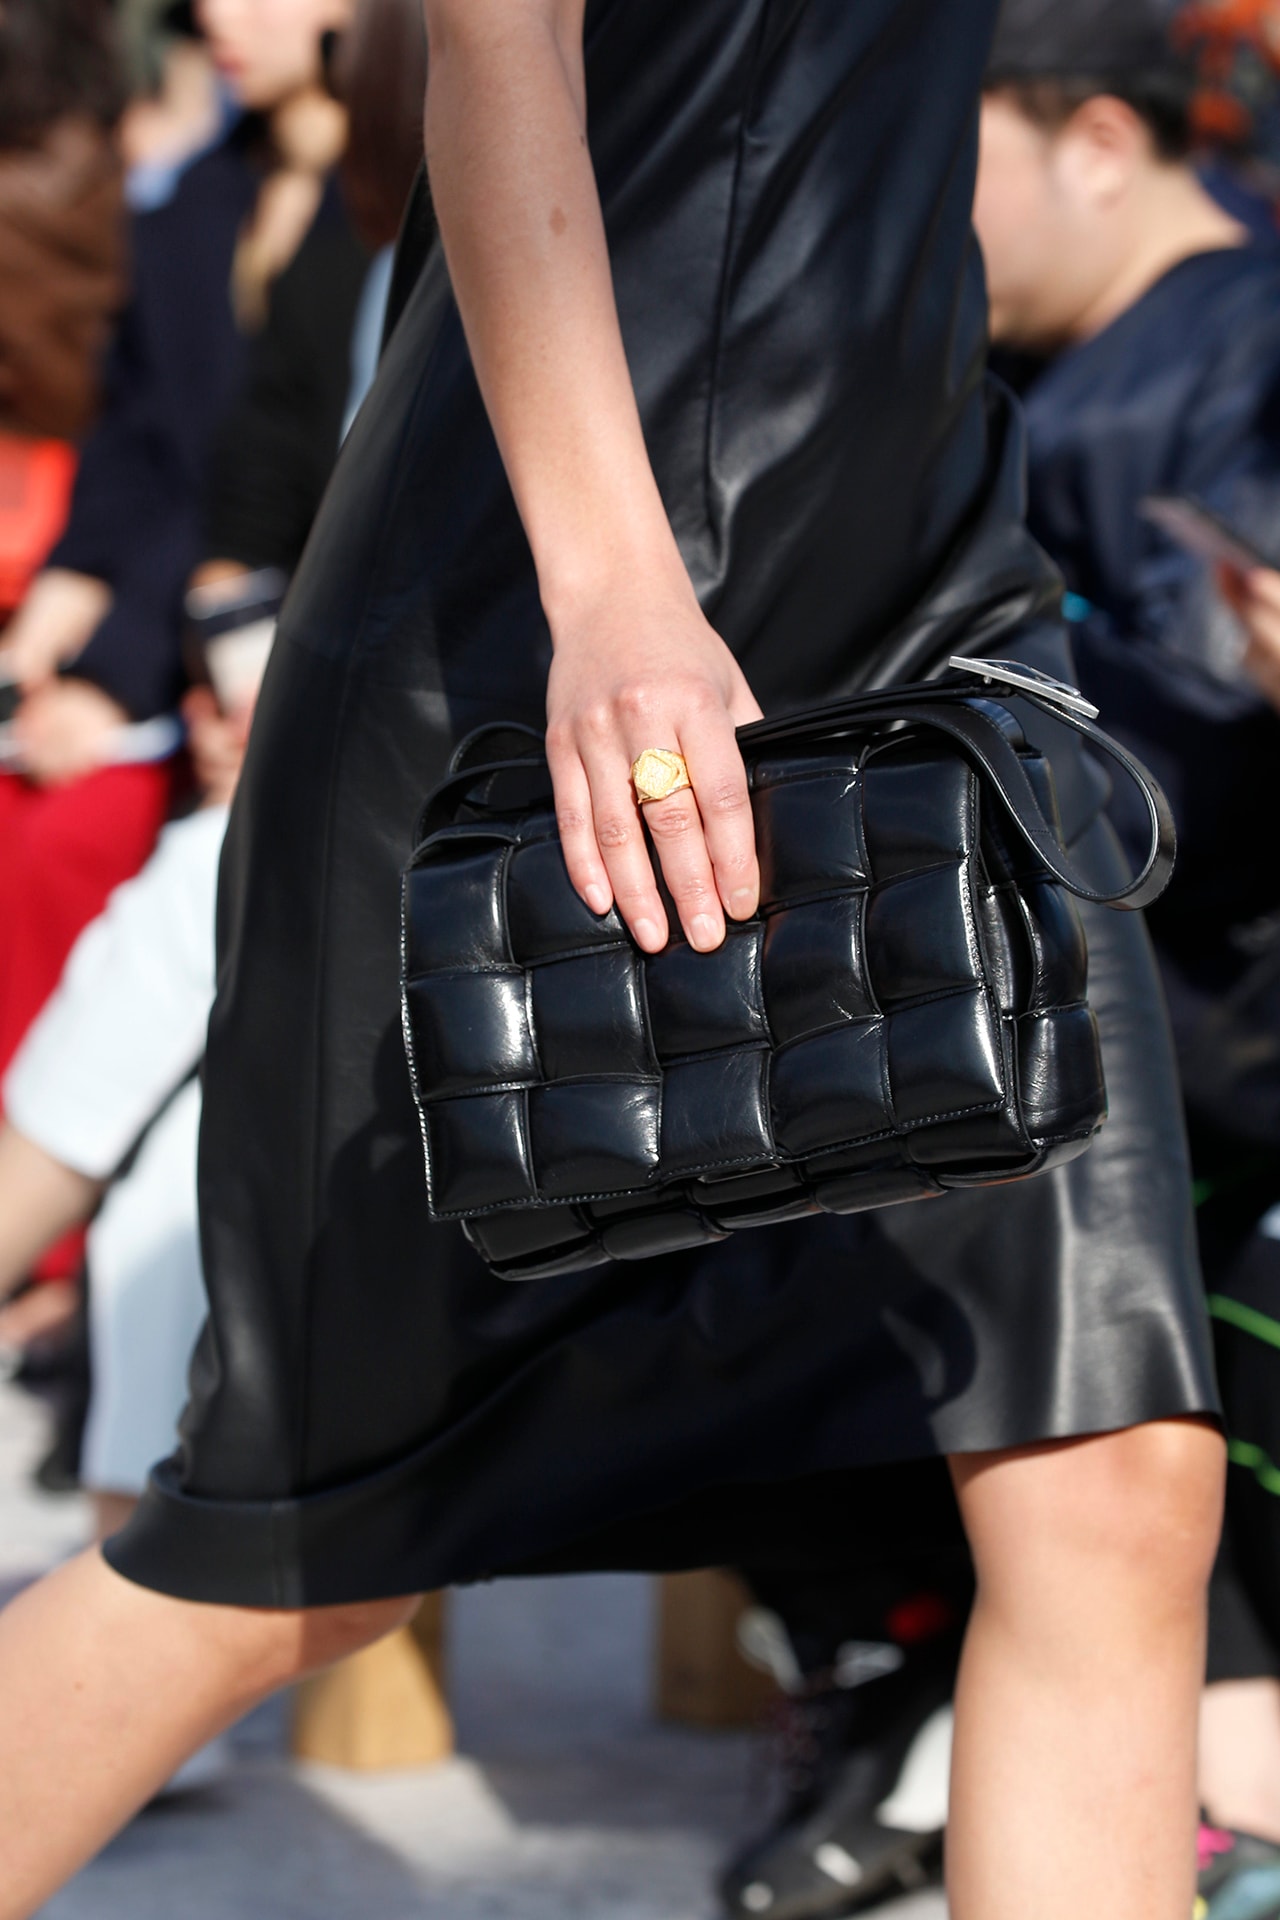 Bottega Veneta Milan Fashion Week Fall Winter 2019 FW19 Daniel Lee Debut Runway Show black leather bag